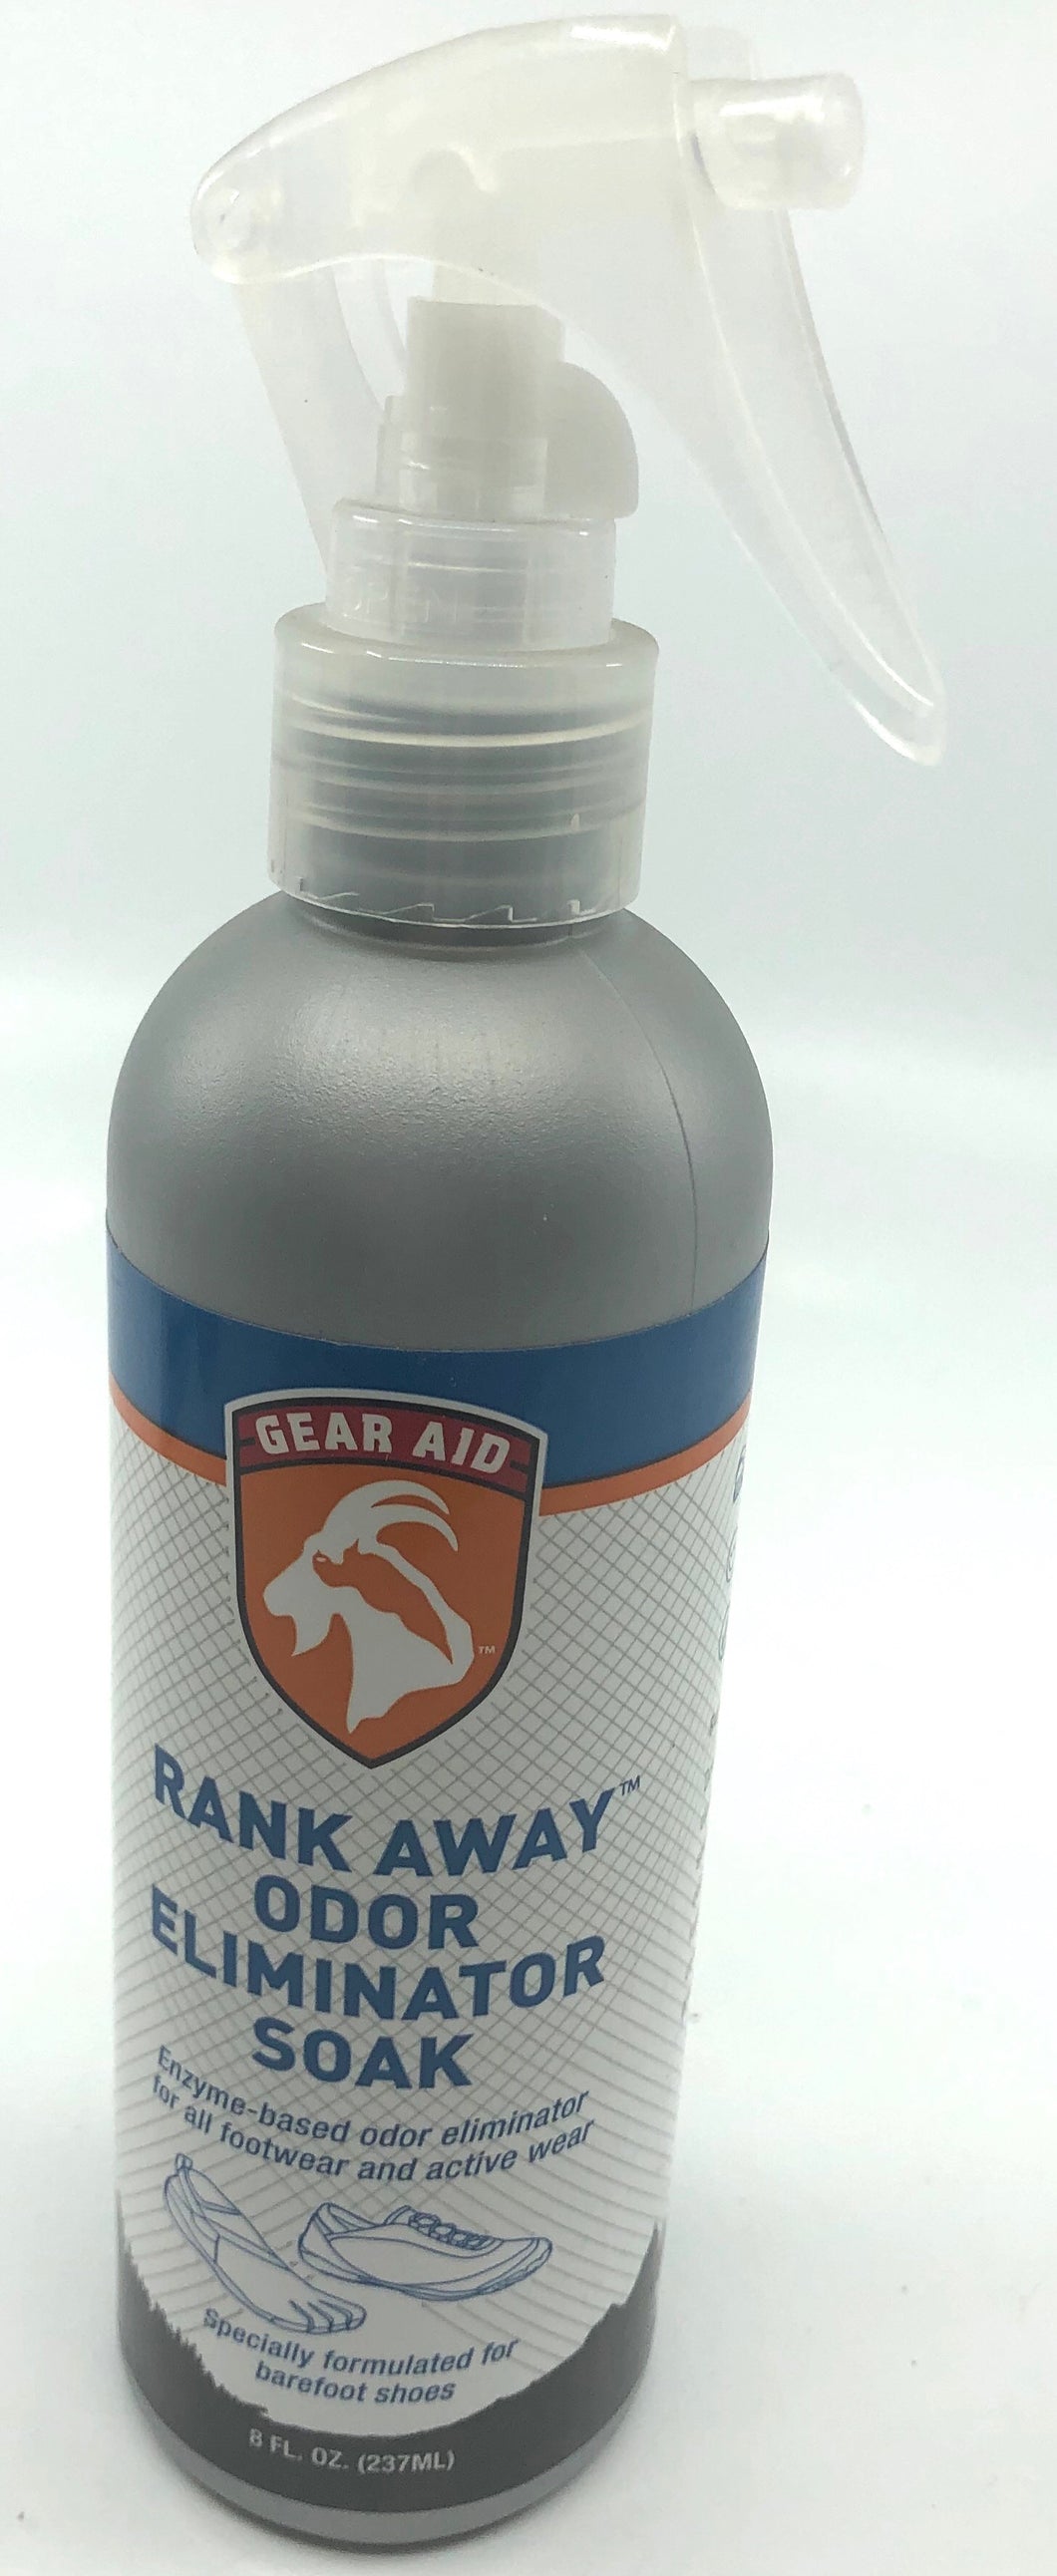 Gear Aid Rank Away Odor Eliminator Soak